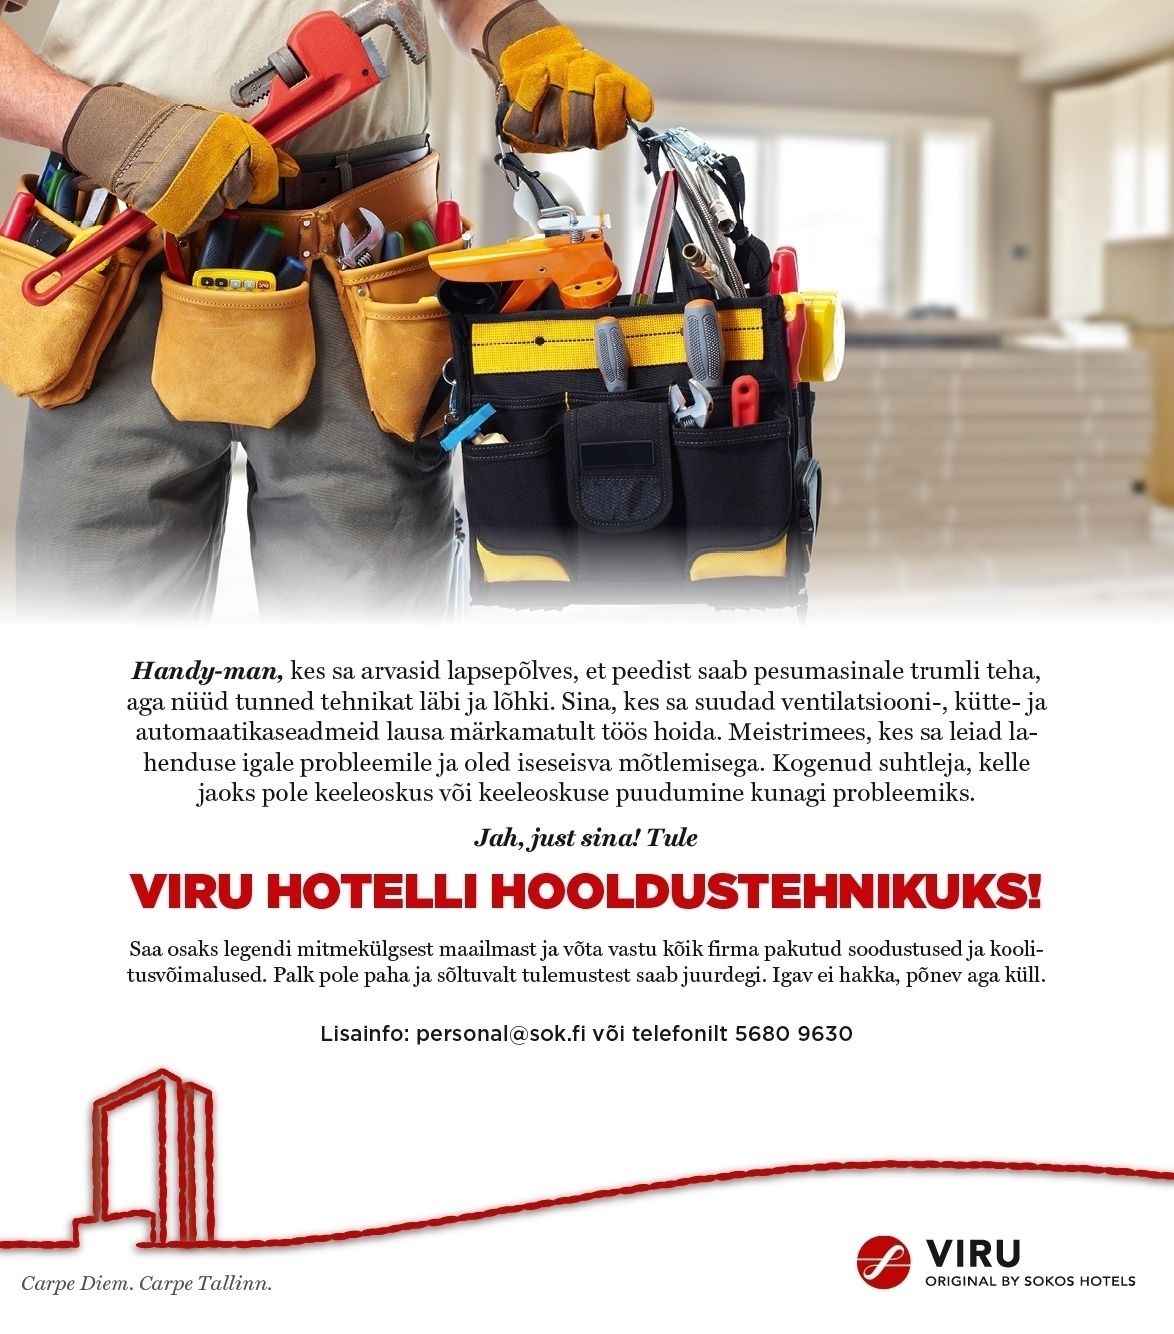 Original Sokos Hotel Viru Handy-man, tule VIRU HOTELLI HOOLDUSTEHNIKUKS!